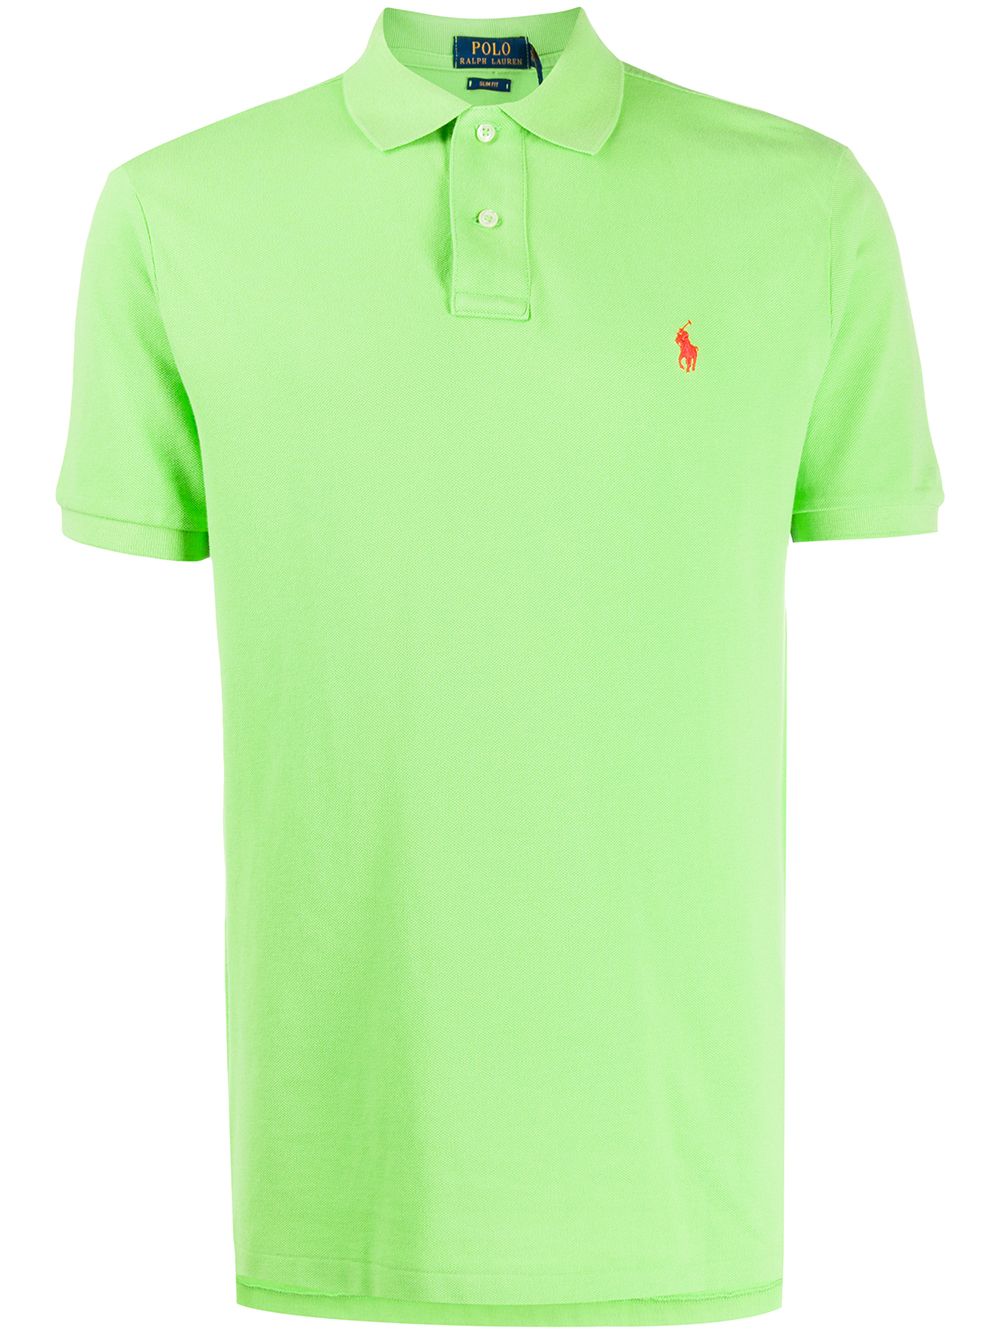 Polo Ralph Lauren green embroidered logo polo shirt for men | 710795080021  at 